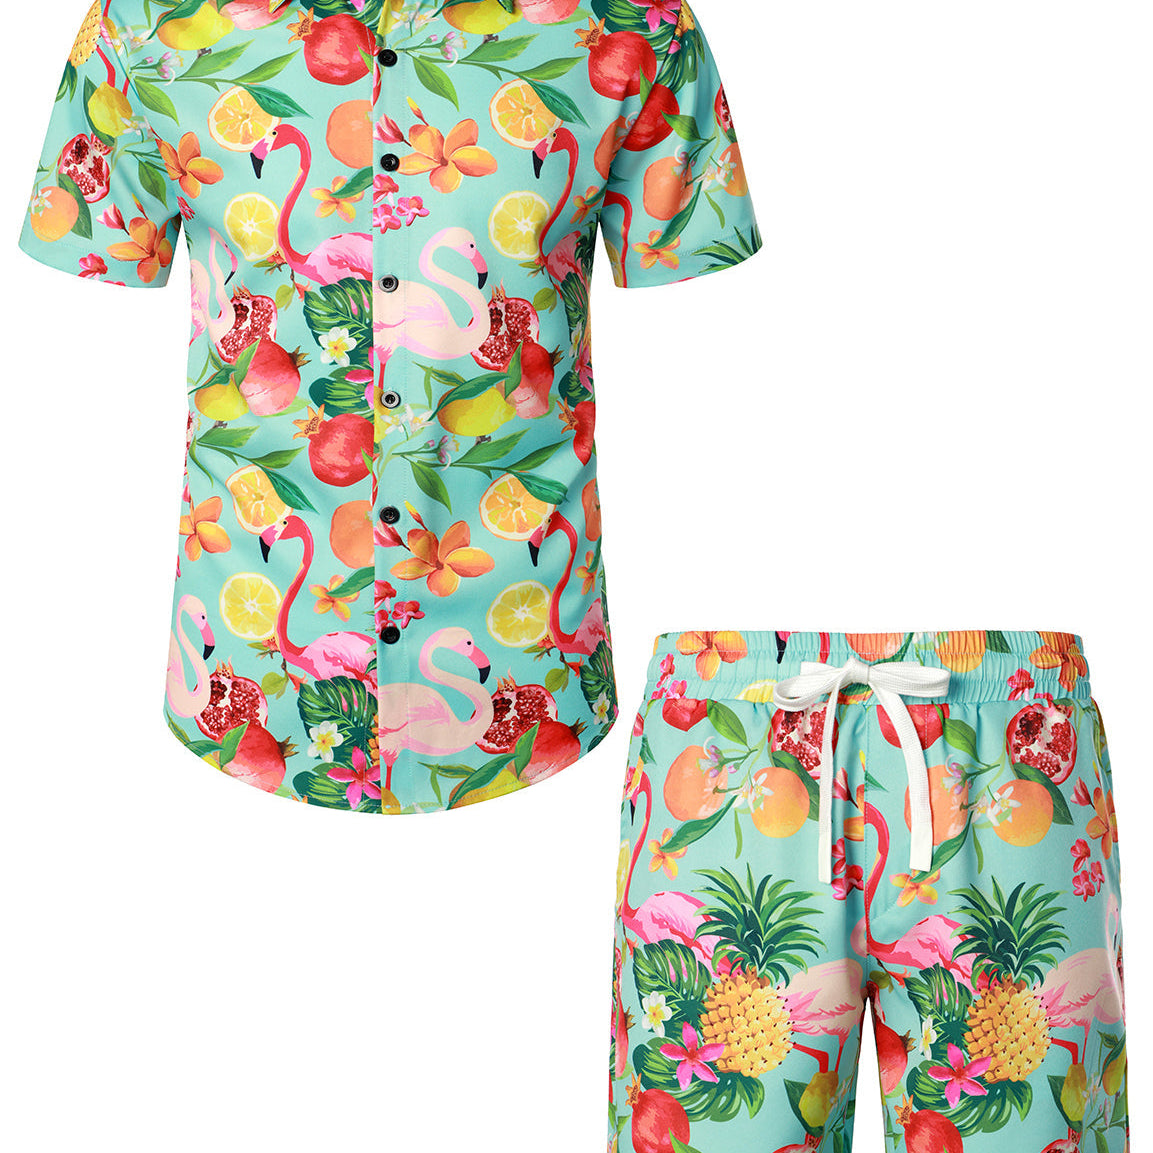 Men's Flamingo Pineapple Print Hawaiian Shirt & Shorts Set